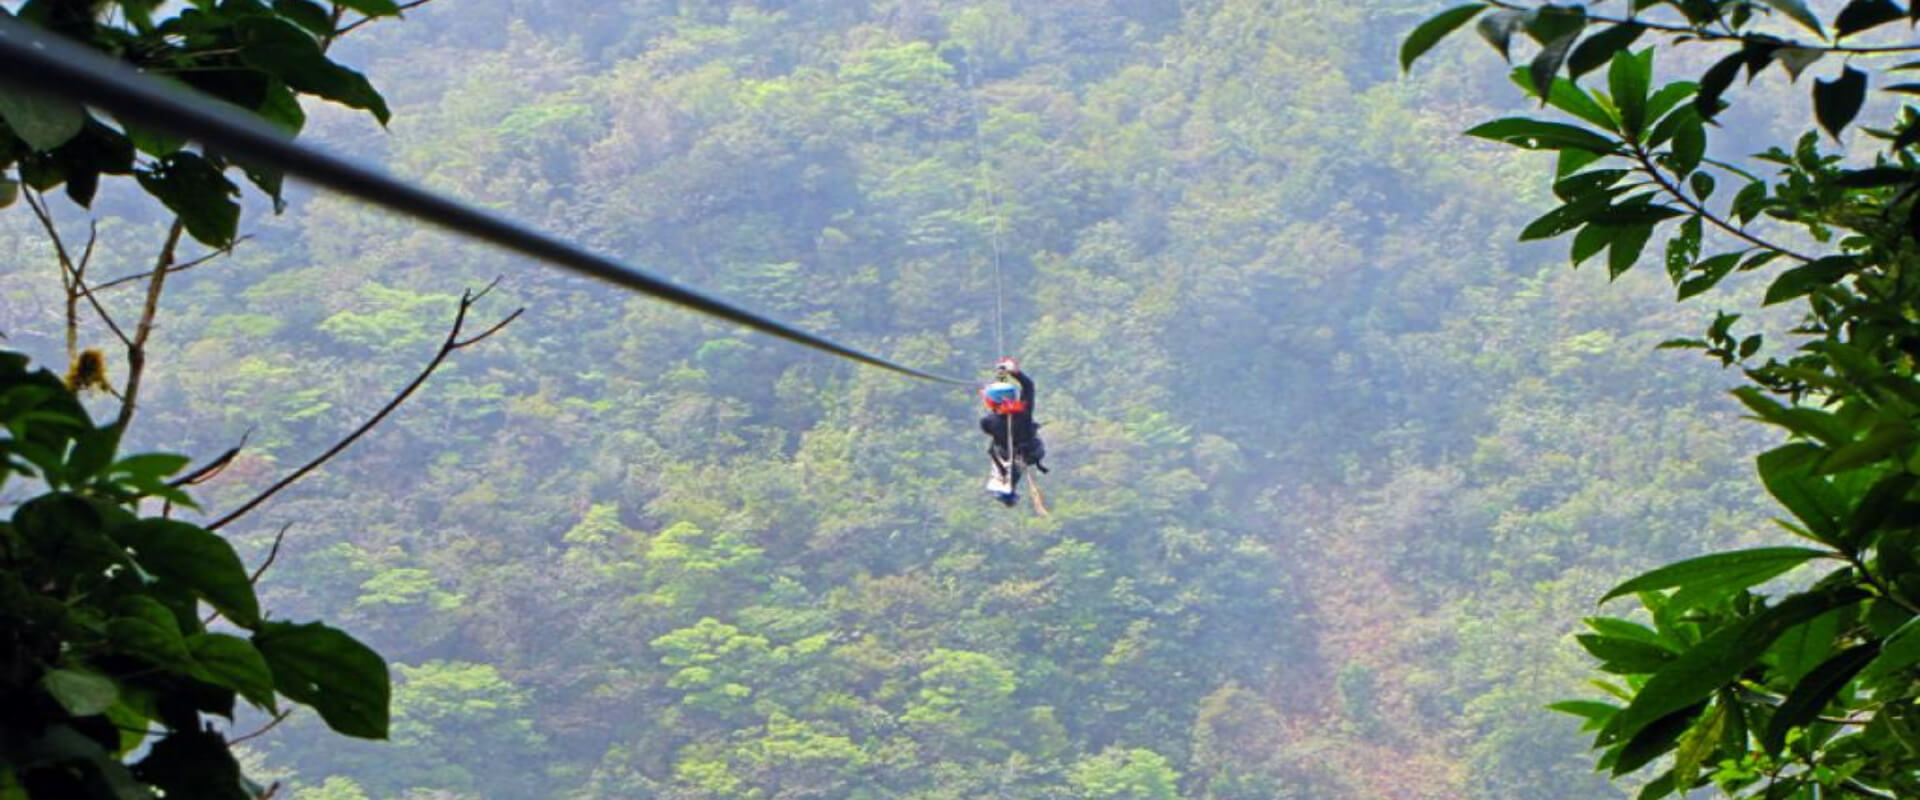 Canopy Extreme Park en Monteverde | Costa Rica Jade Tours